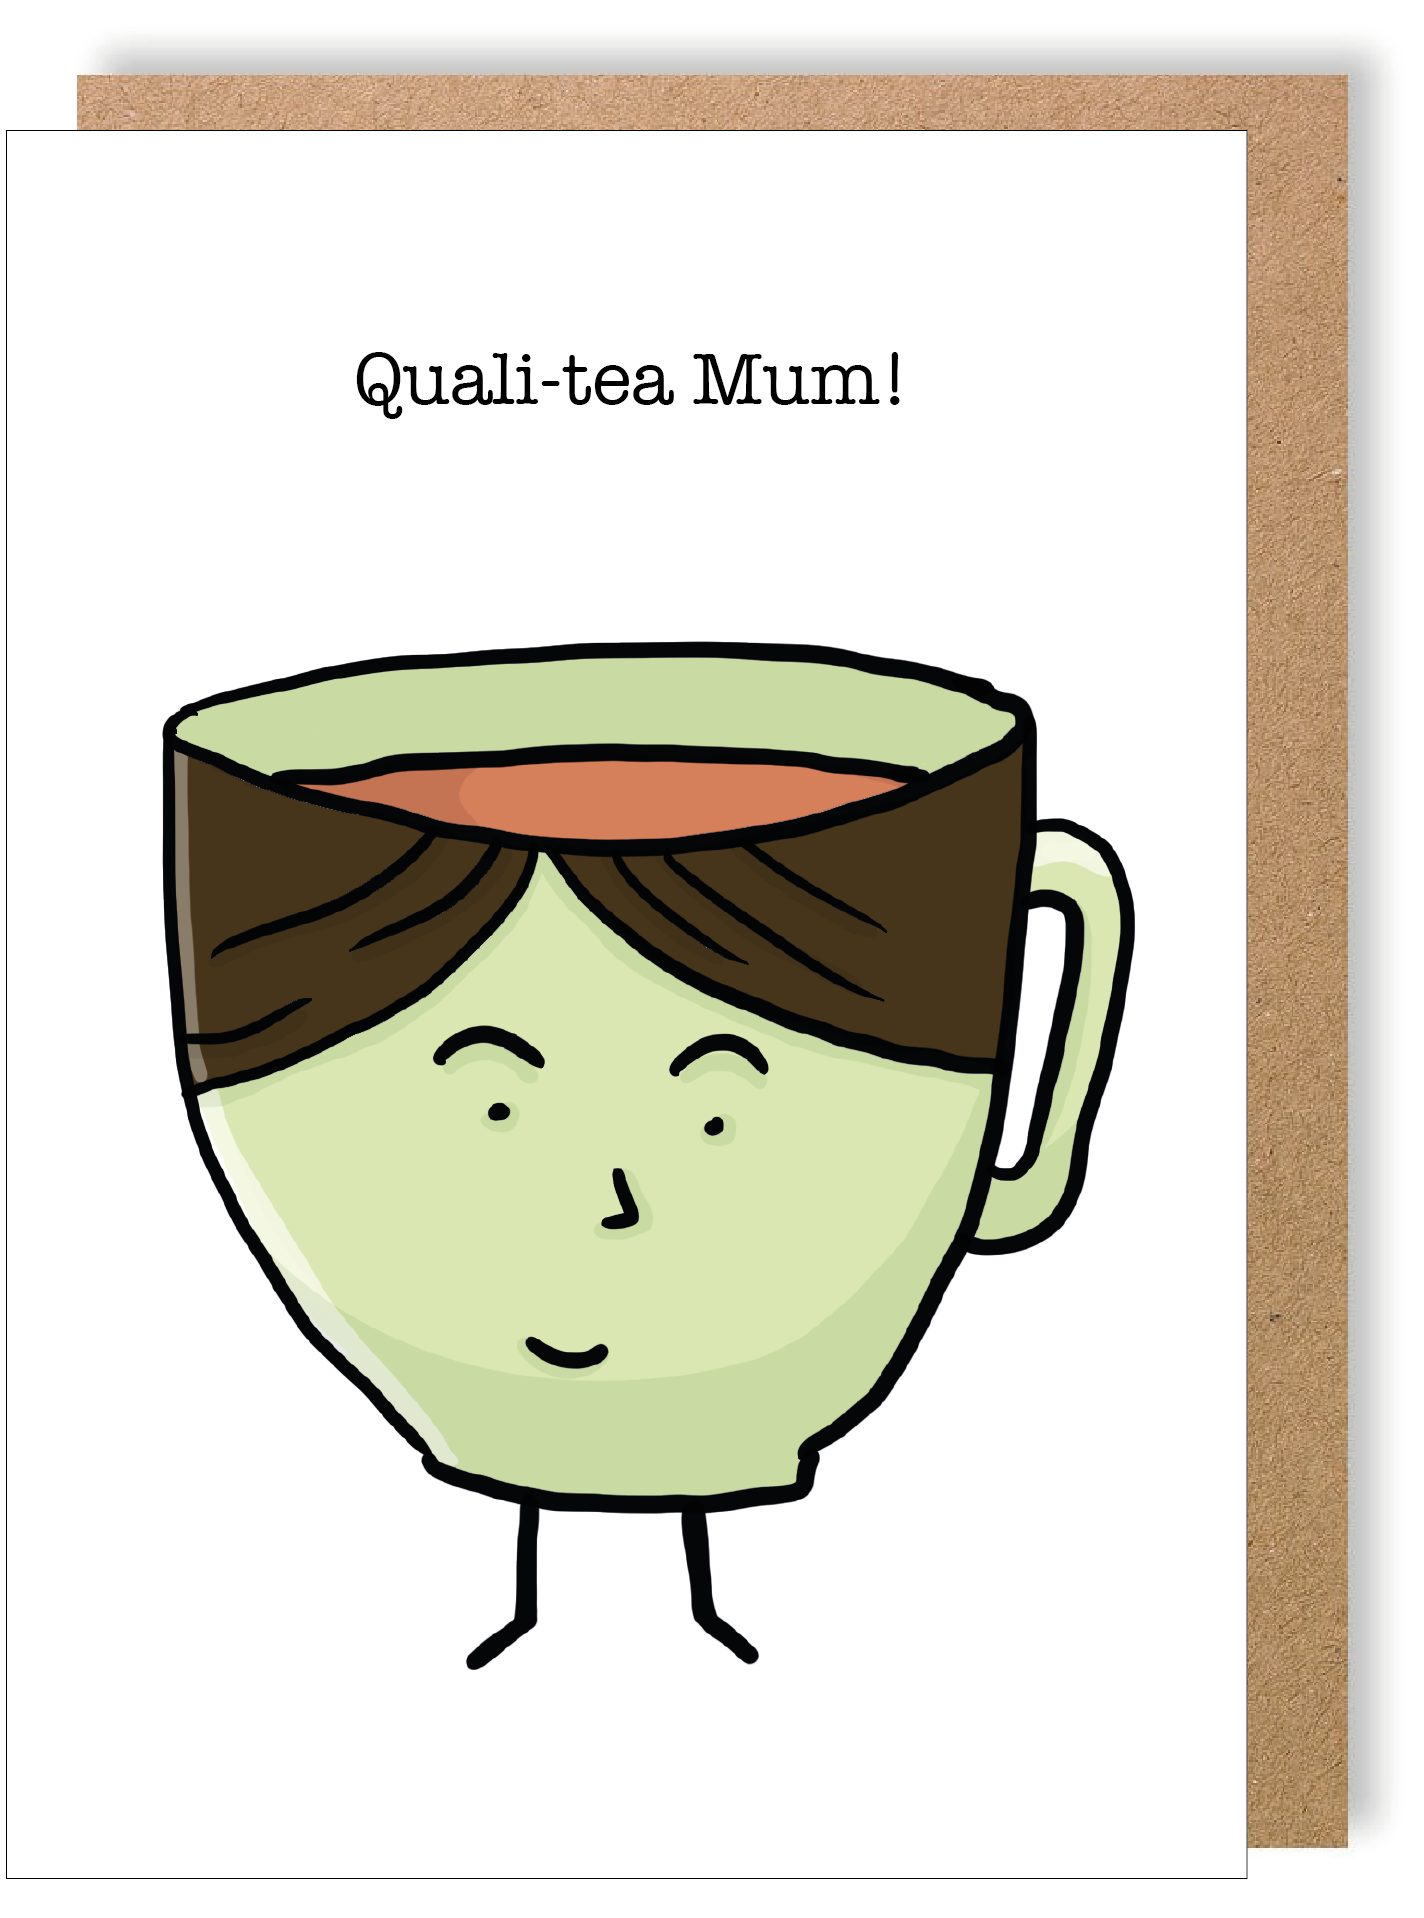 Quality Mum - Tea - Greetings Card - LukeHorton Art